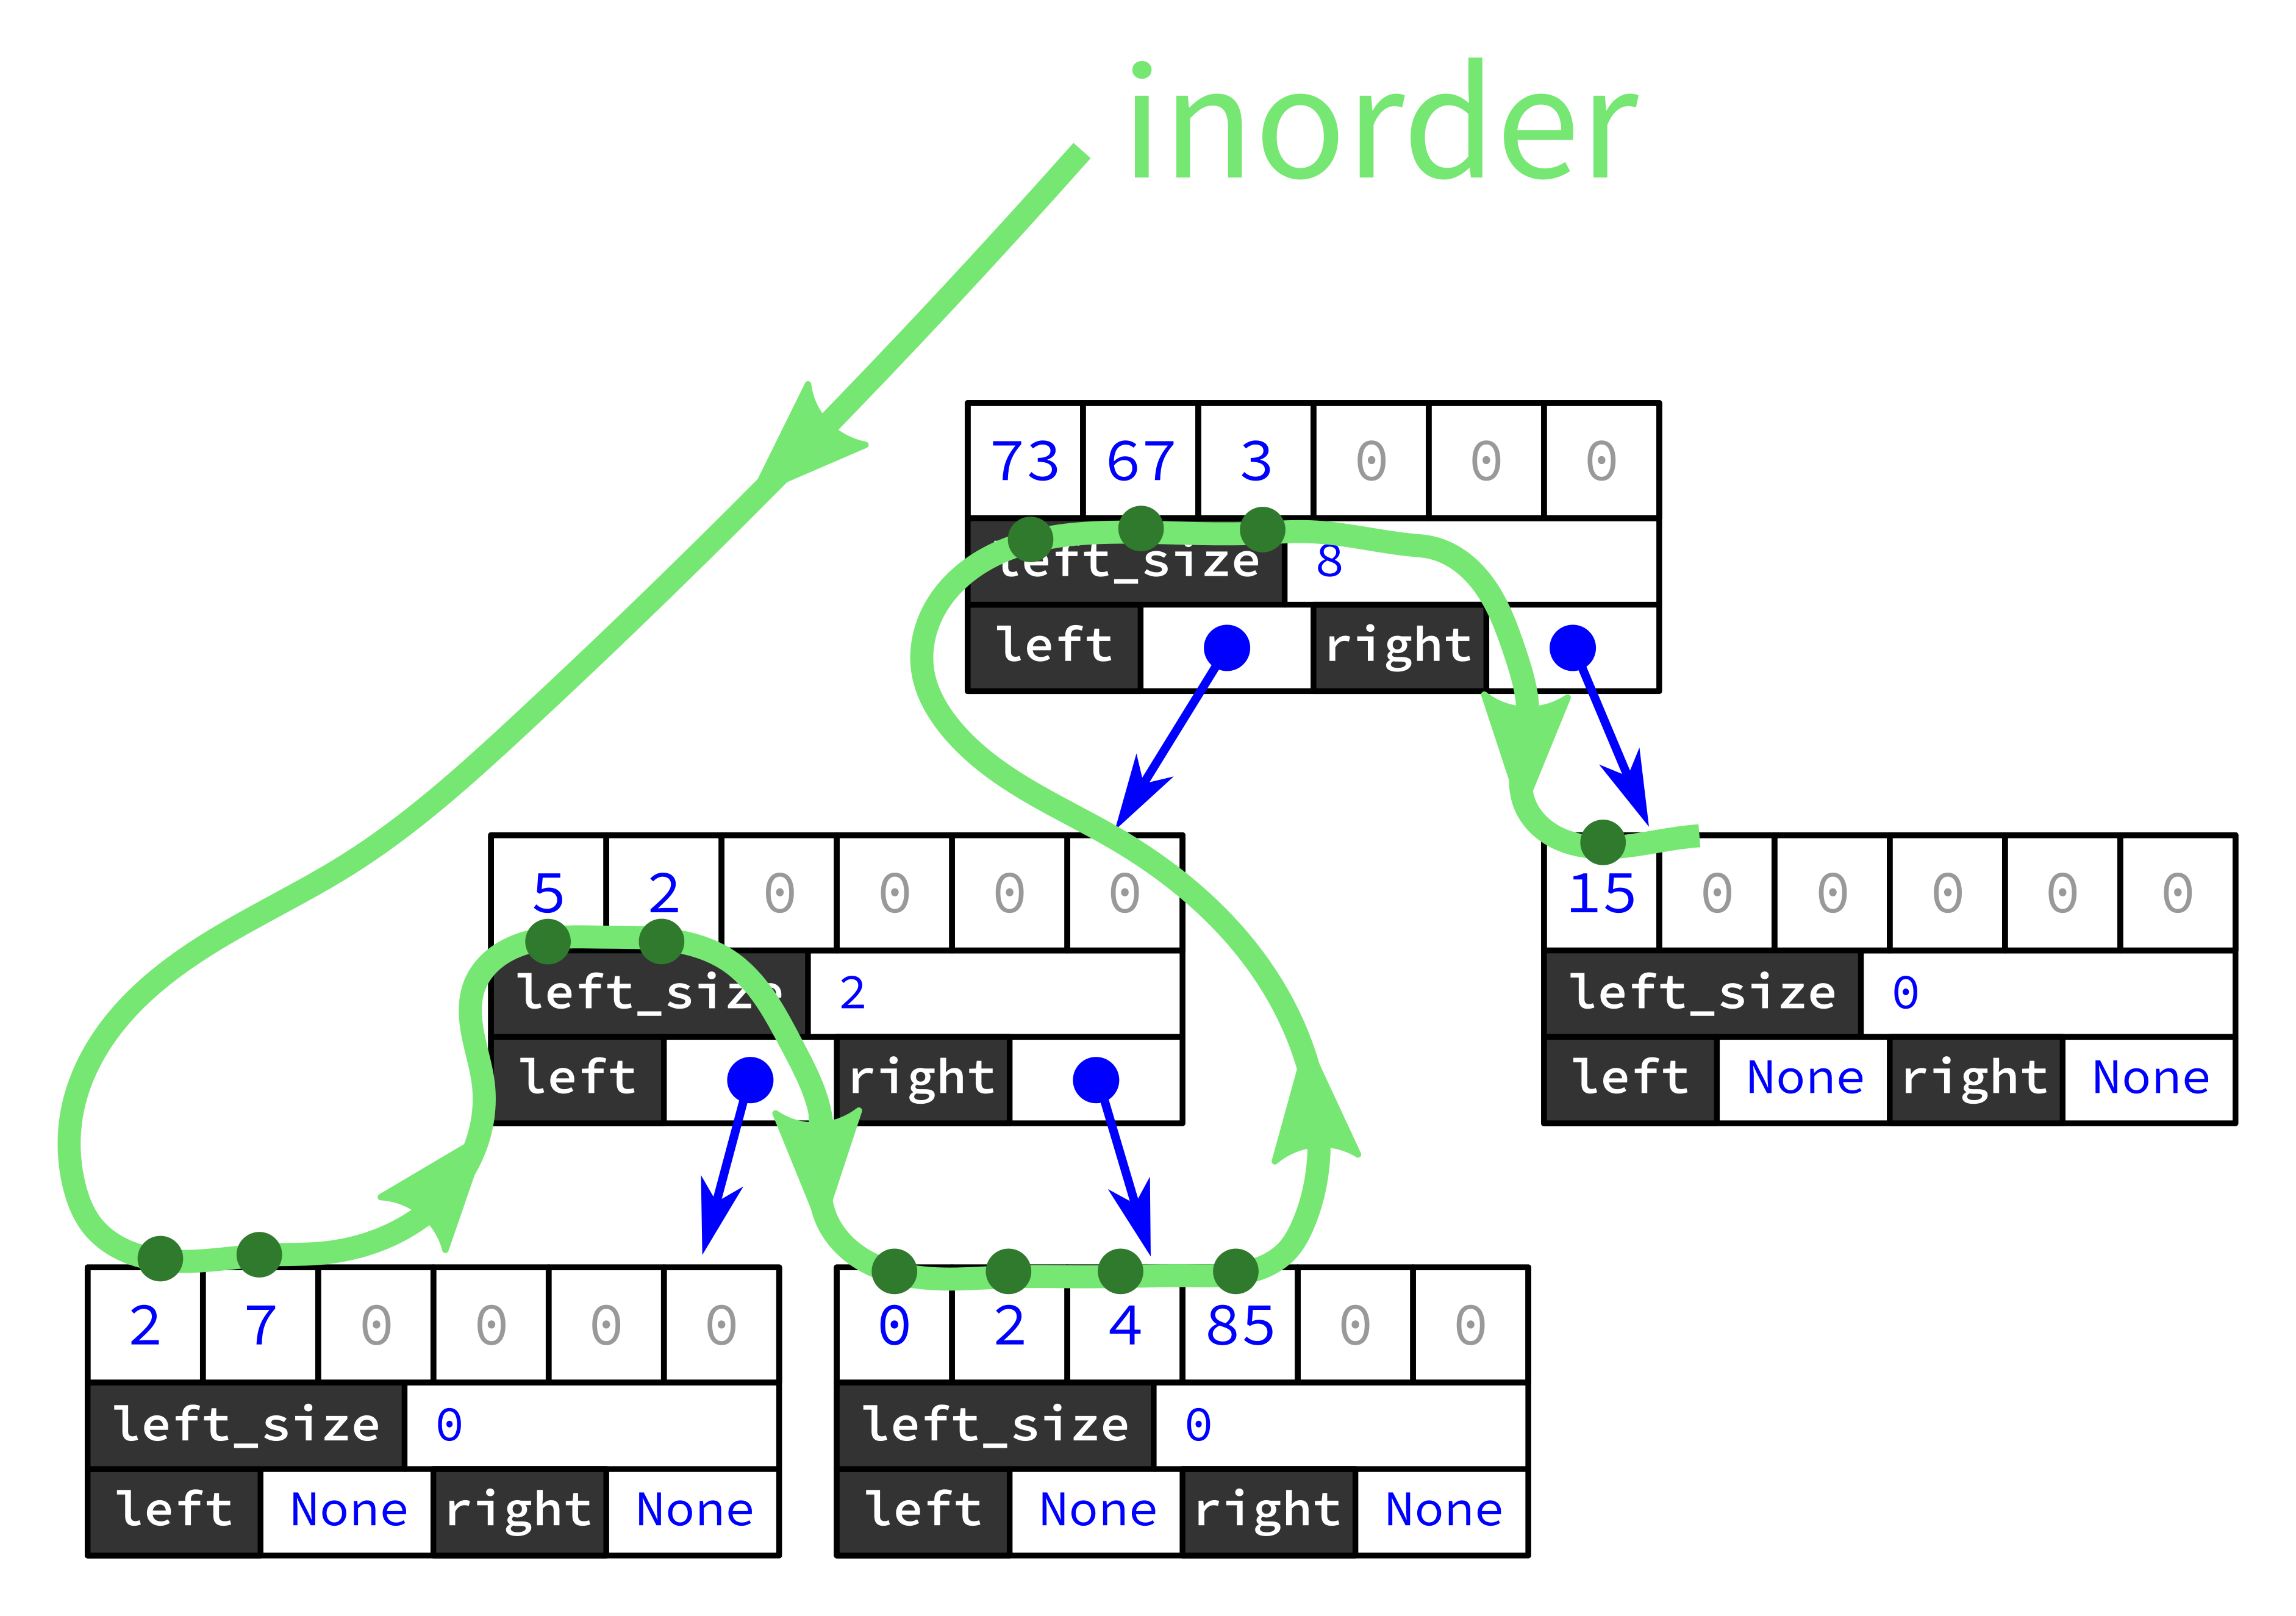 Diagram of inorder traversal of a tree of BlockNodes